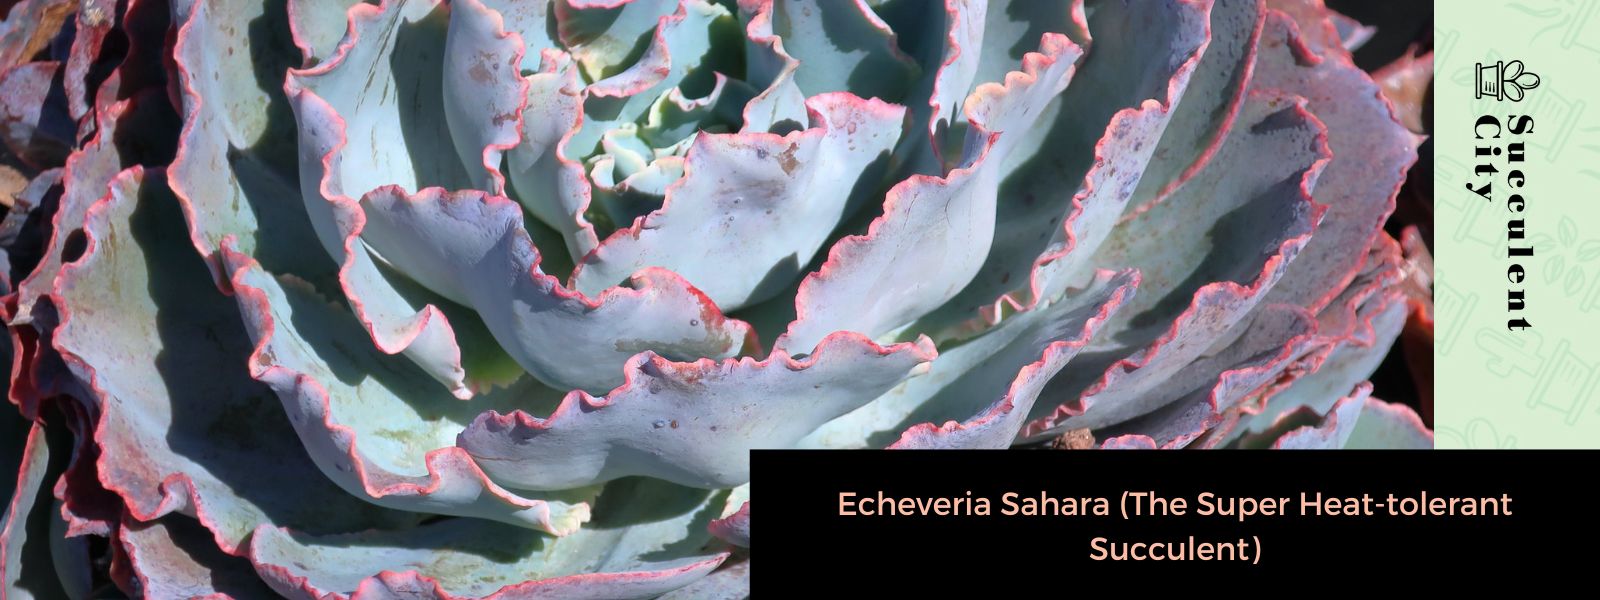 Echeveria Sahara (la suculenta súper tolerante al calor)